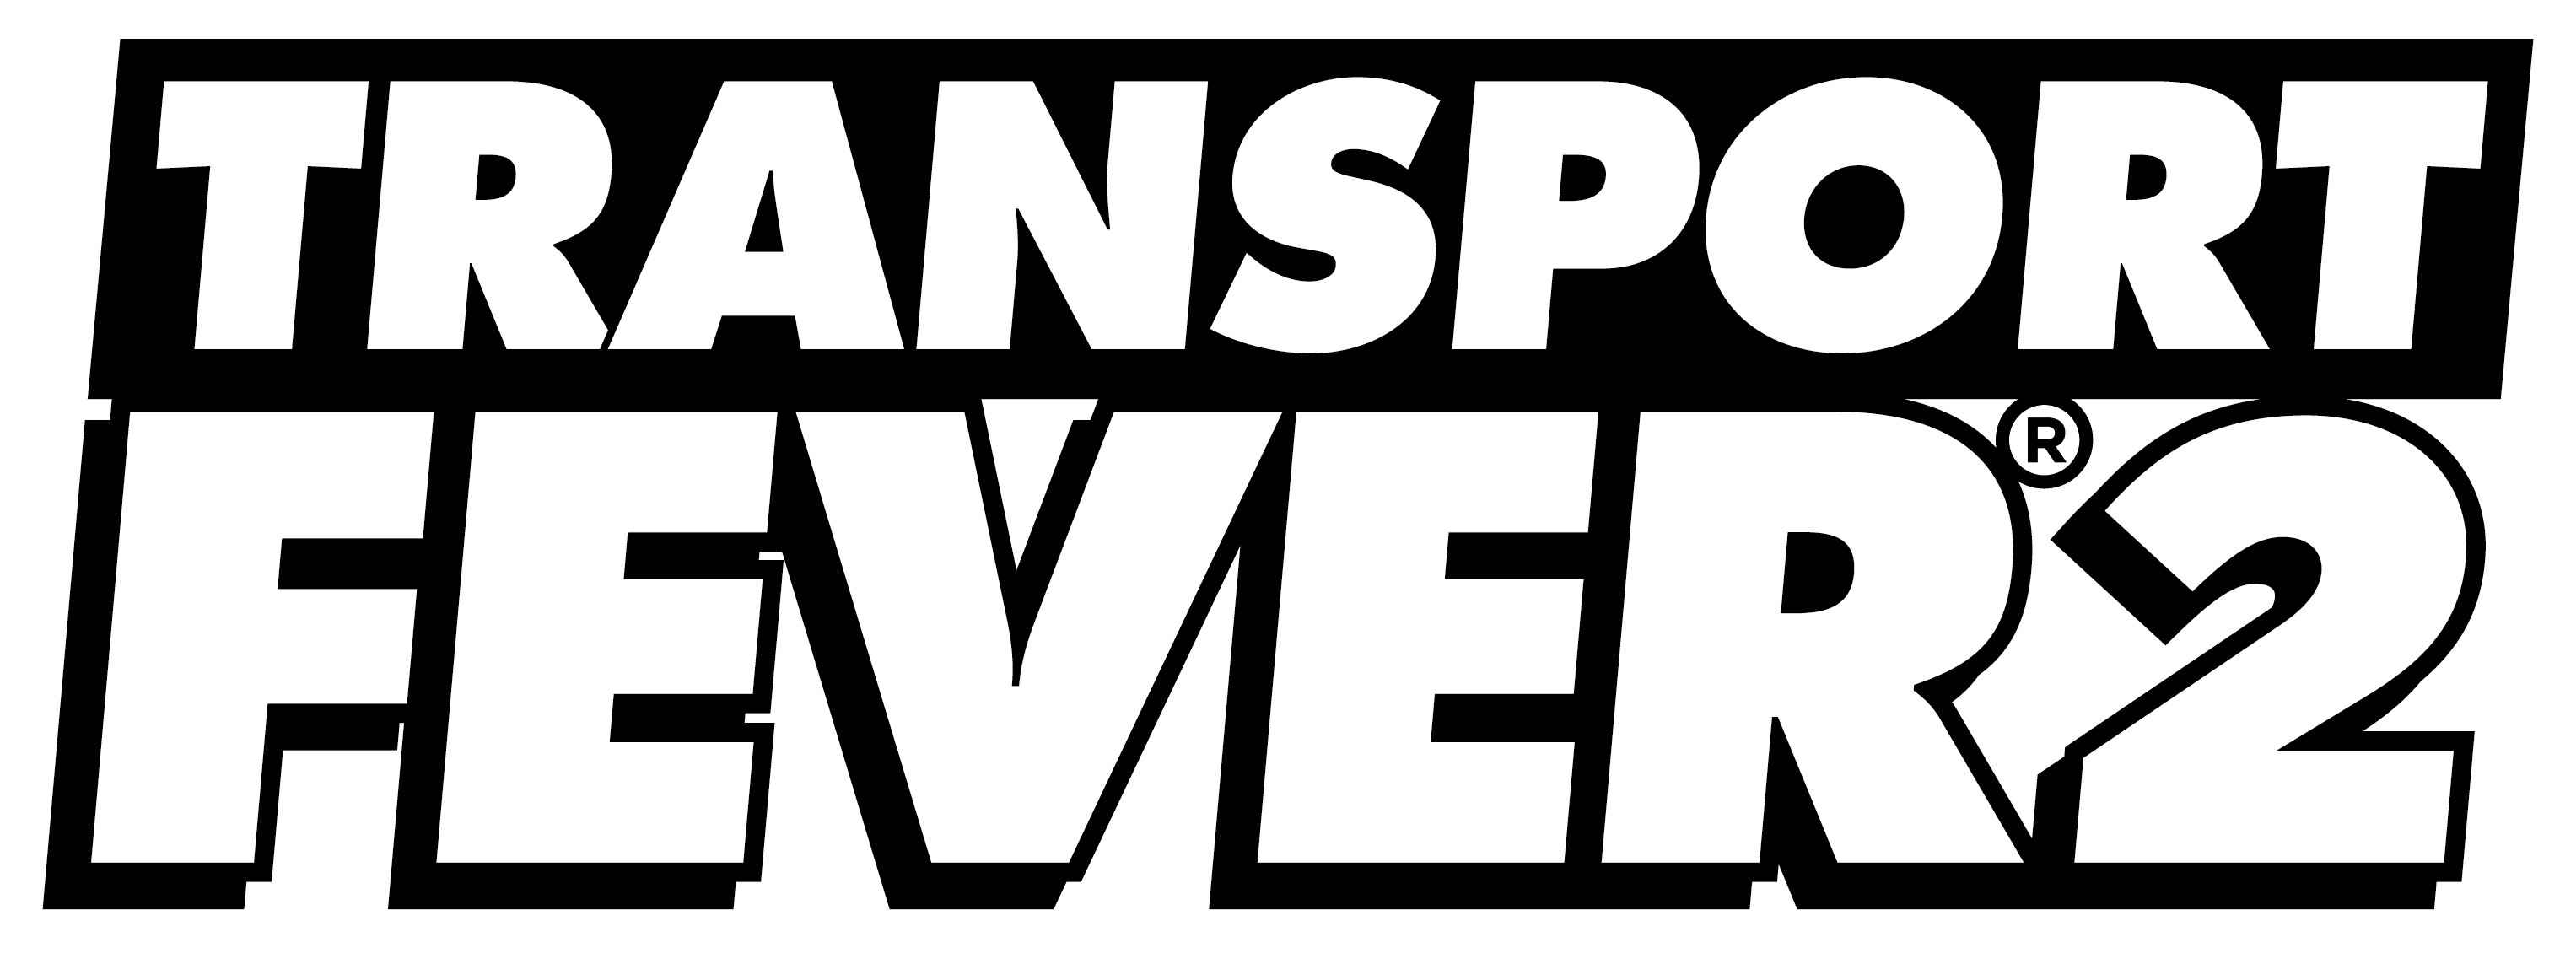 Transport Fever 2 Deluxe Edition Logo